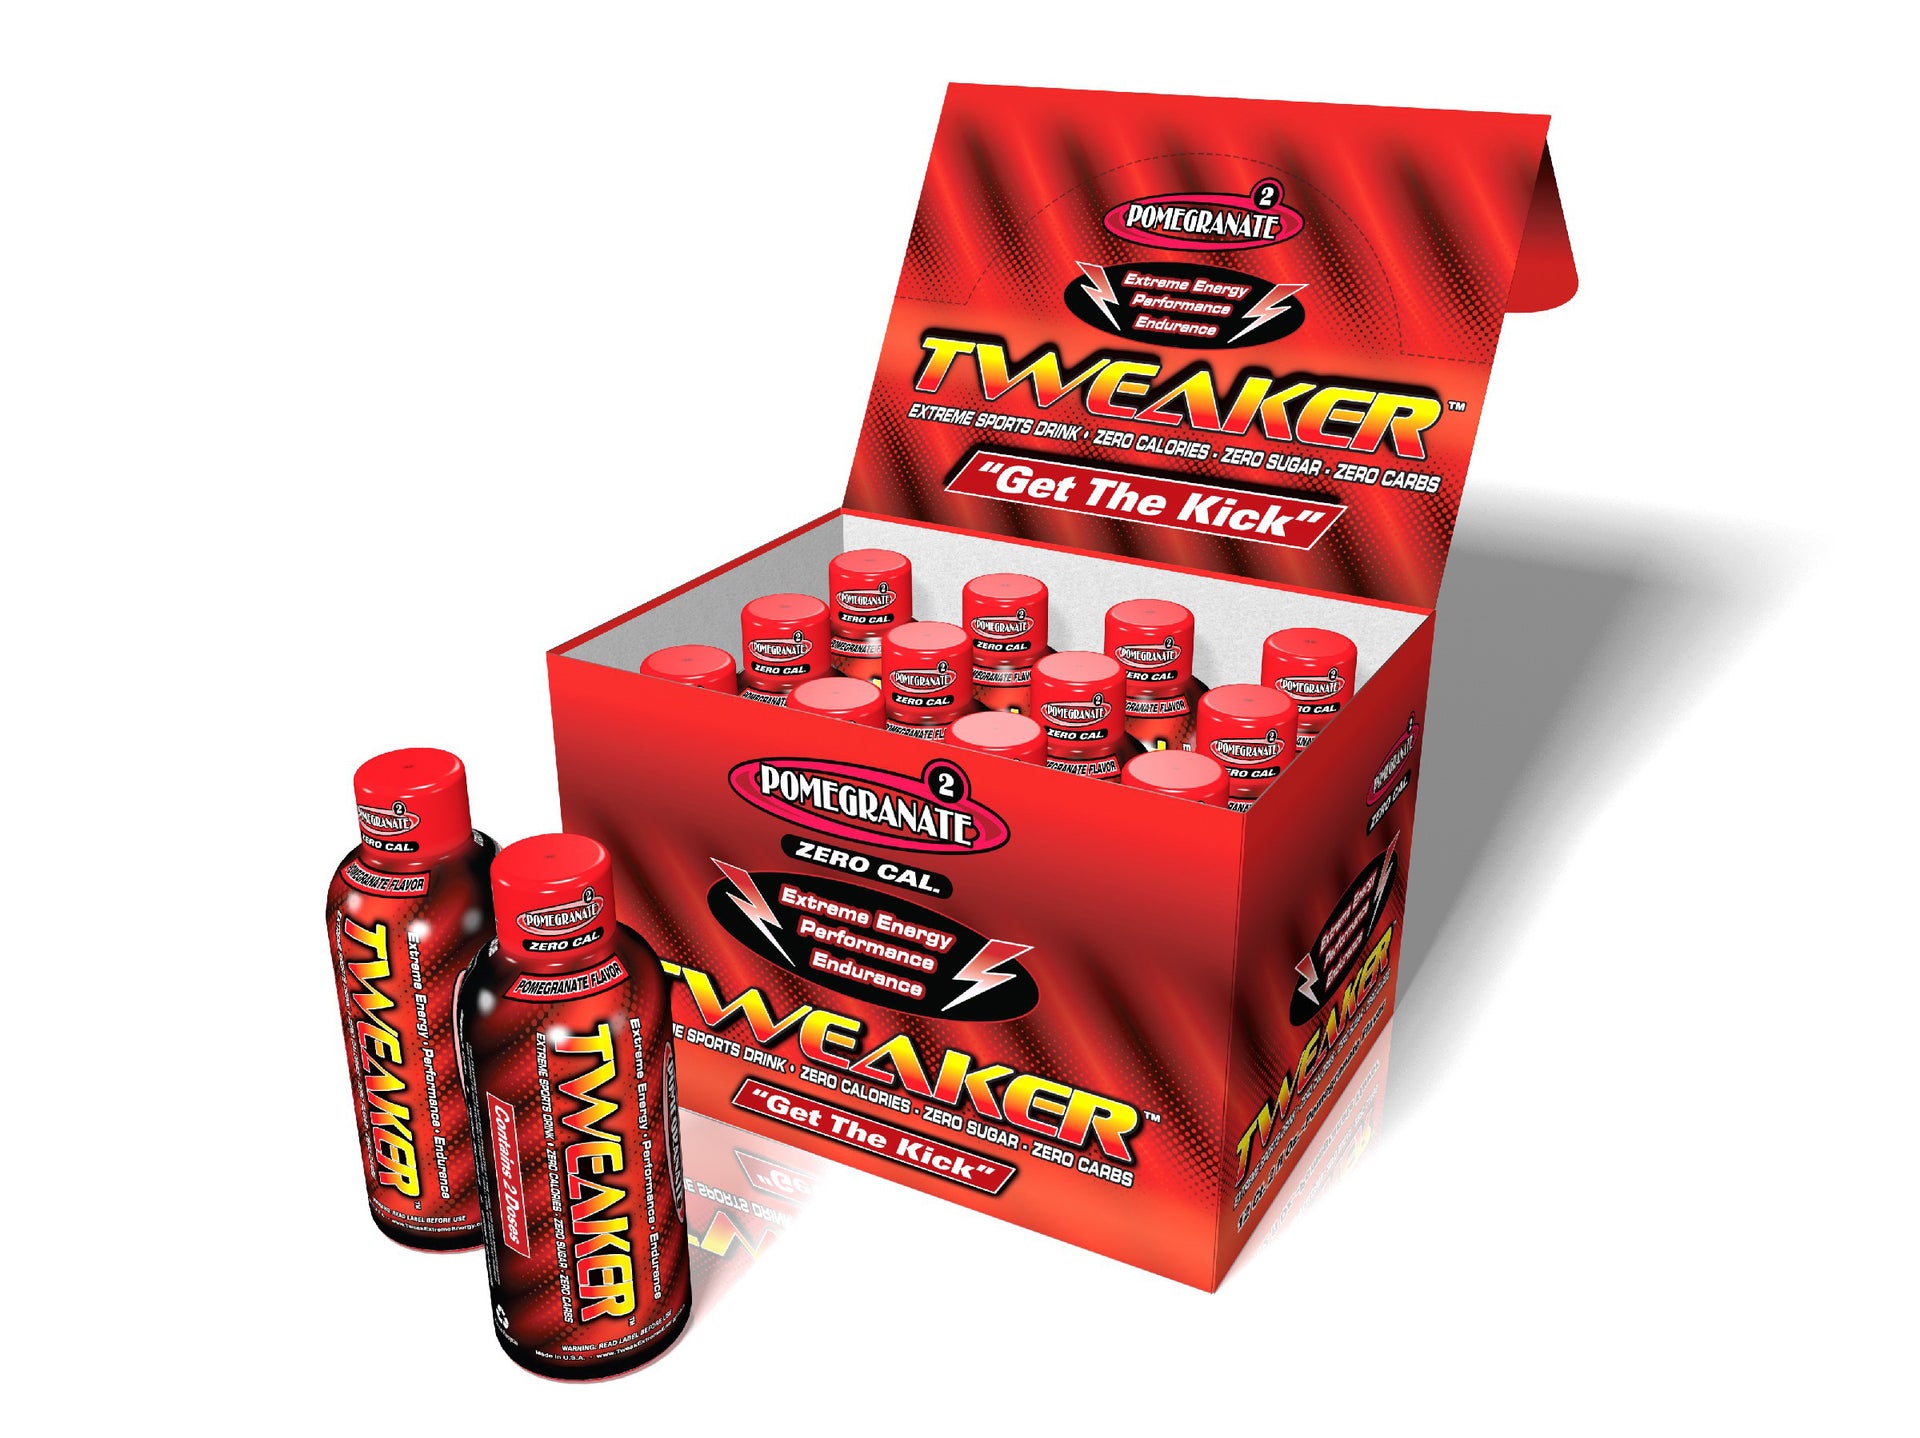 Image shows 12-ct caddy of Tweaker Energy Shot, Pomegranate Flavor